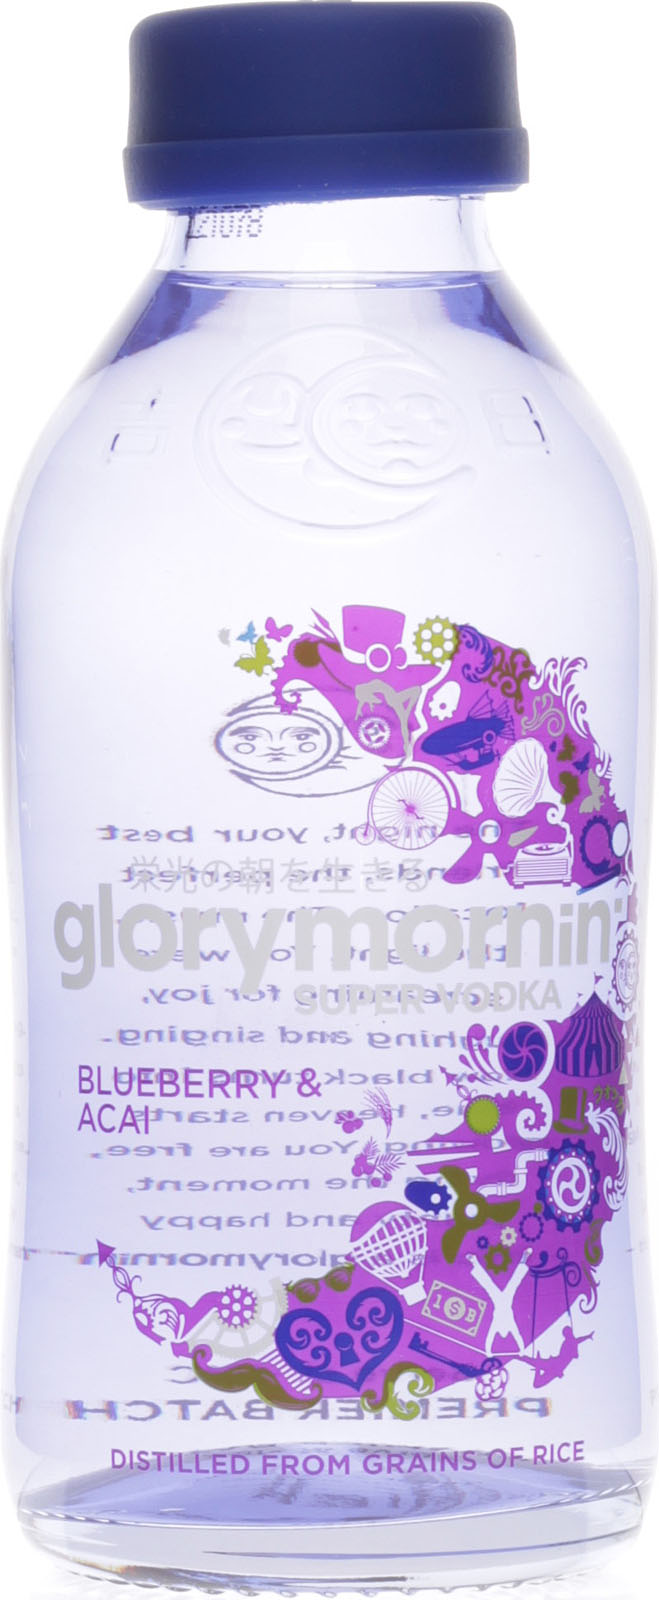 Vodka Super Mornin Shop & - Acai Glory Blueberry im